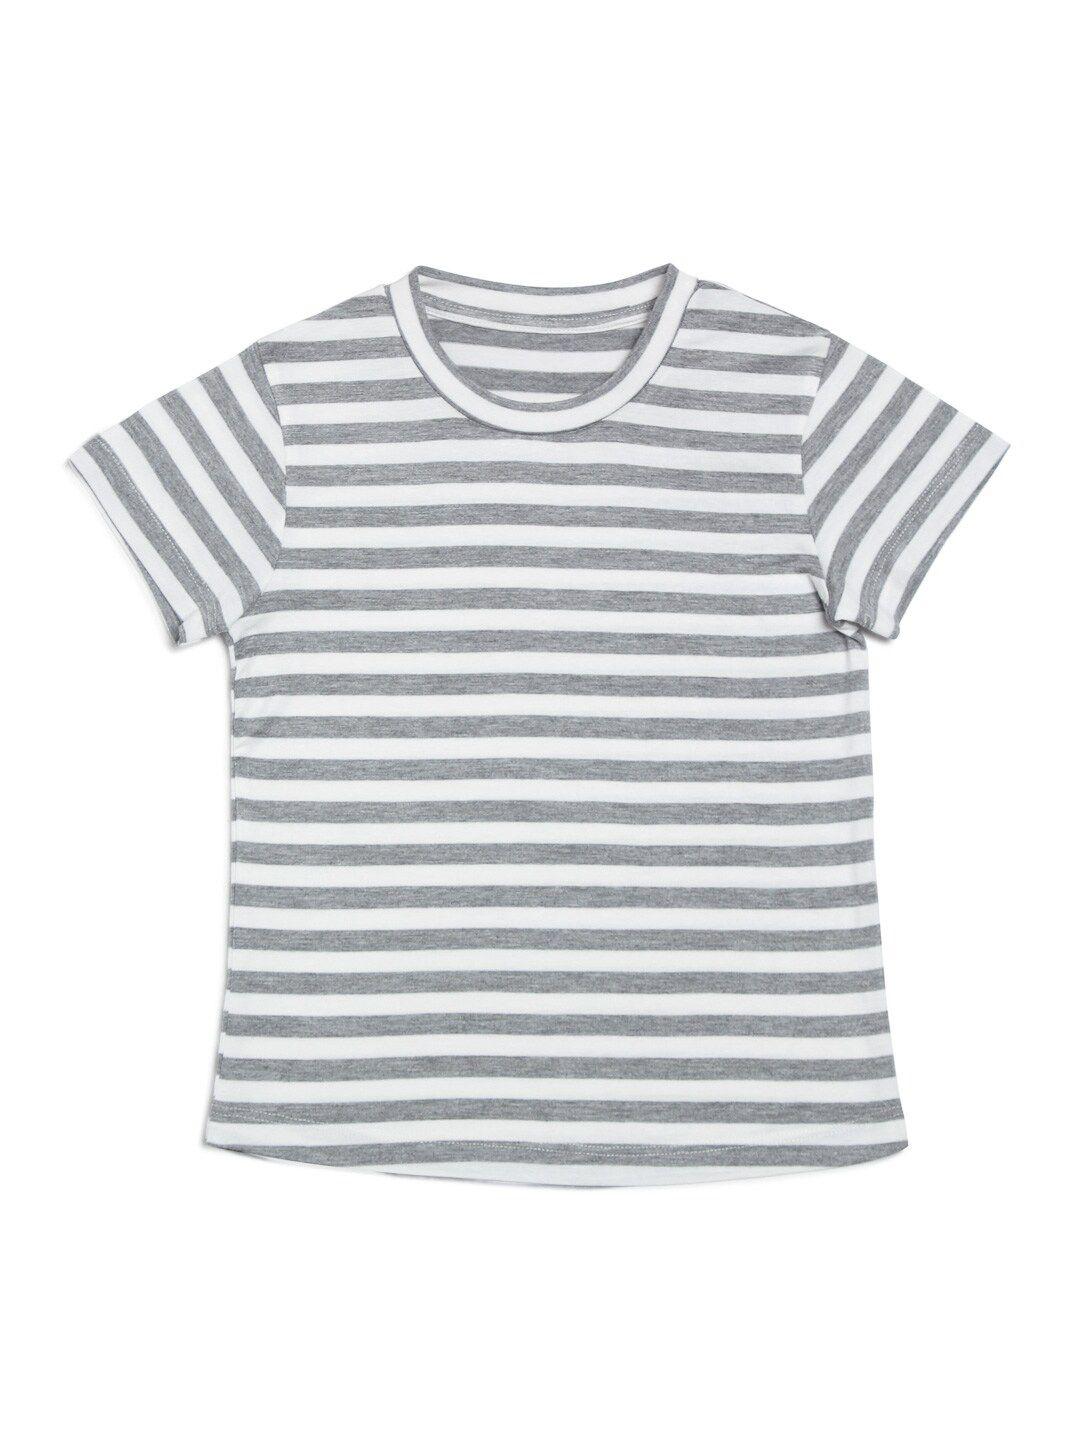 door74 boys striped cotton t-shirt